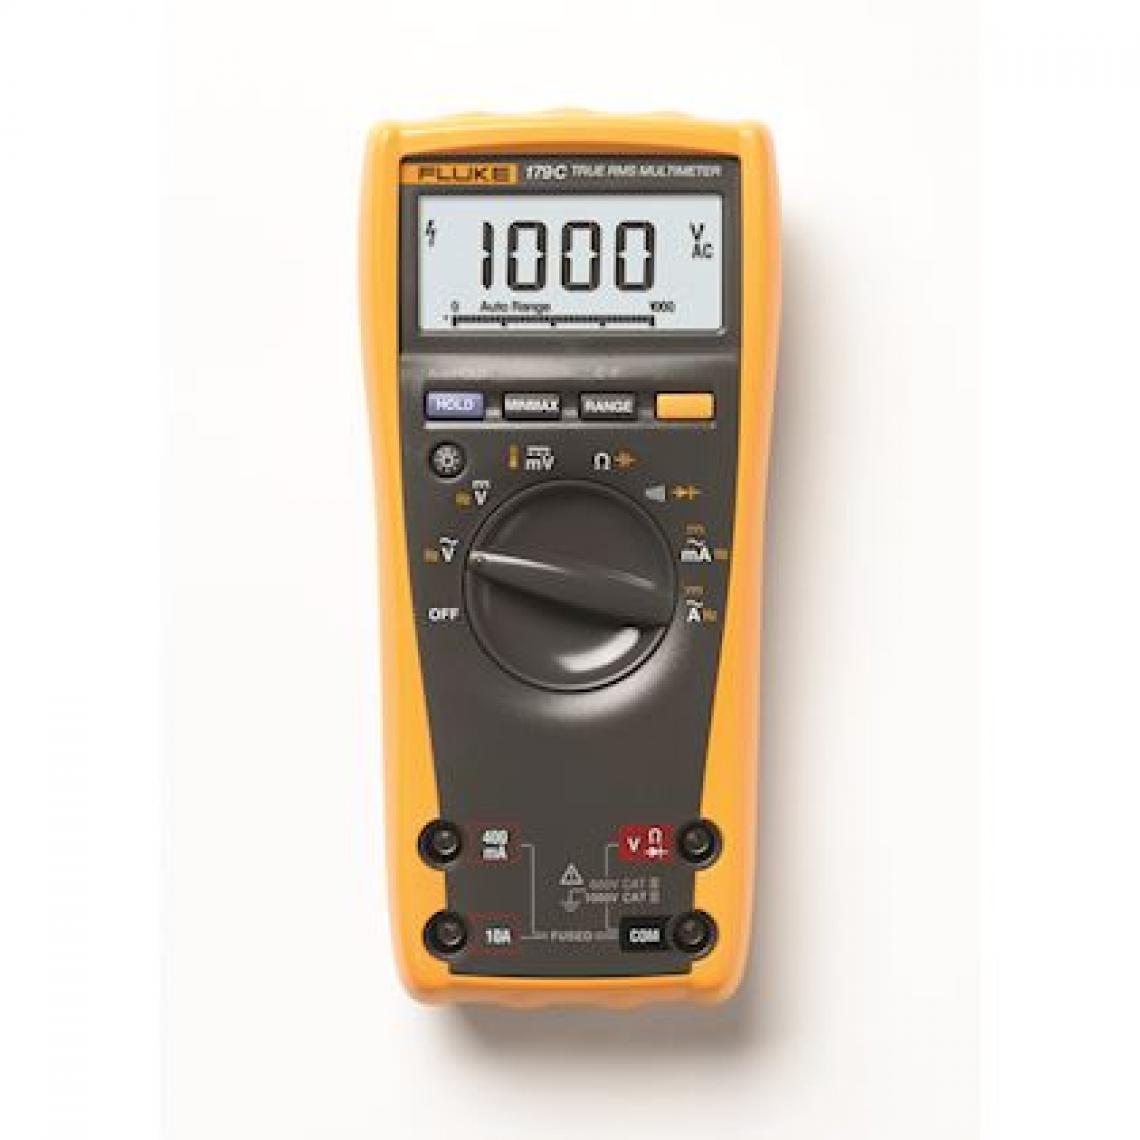 Fluke - multimètre thermomètre numérique - 6000 points trms - fluke fluke179f - Abrasifs et brosses